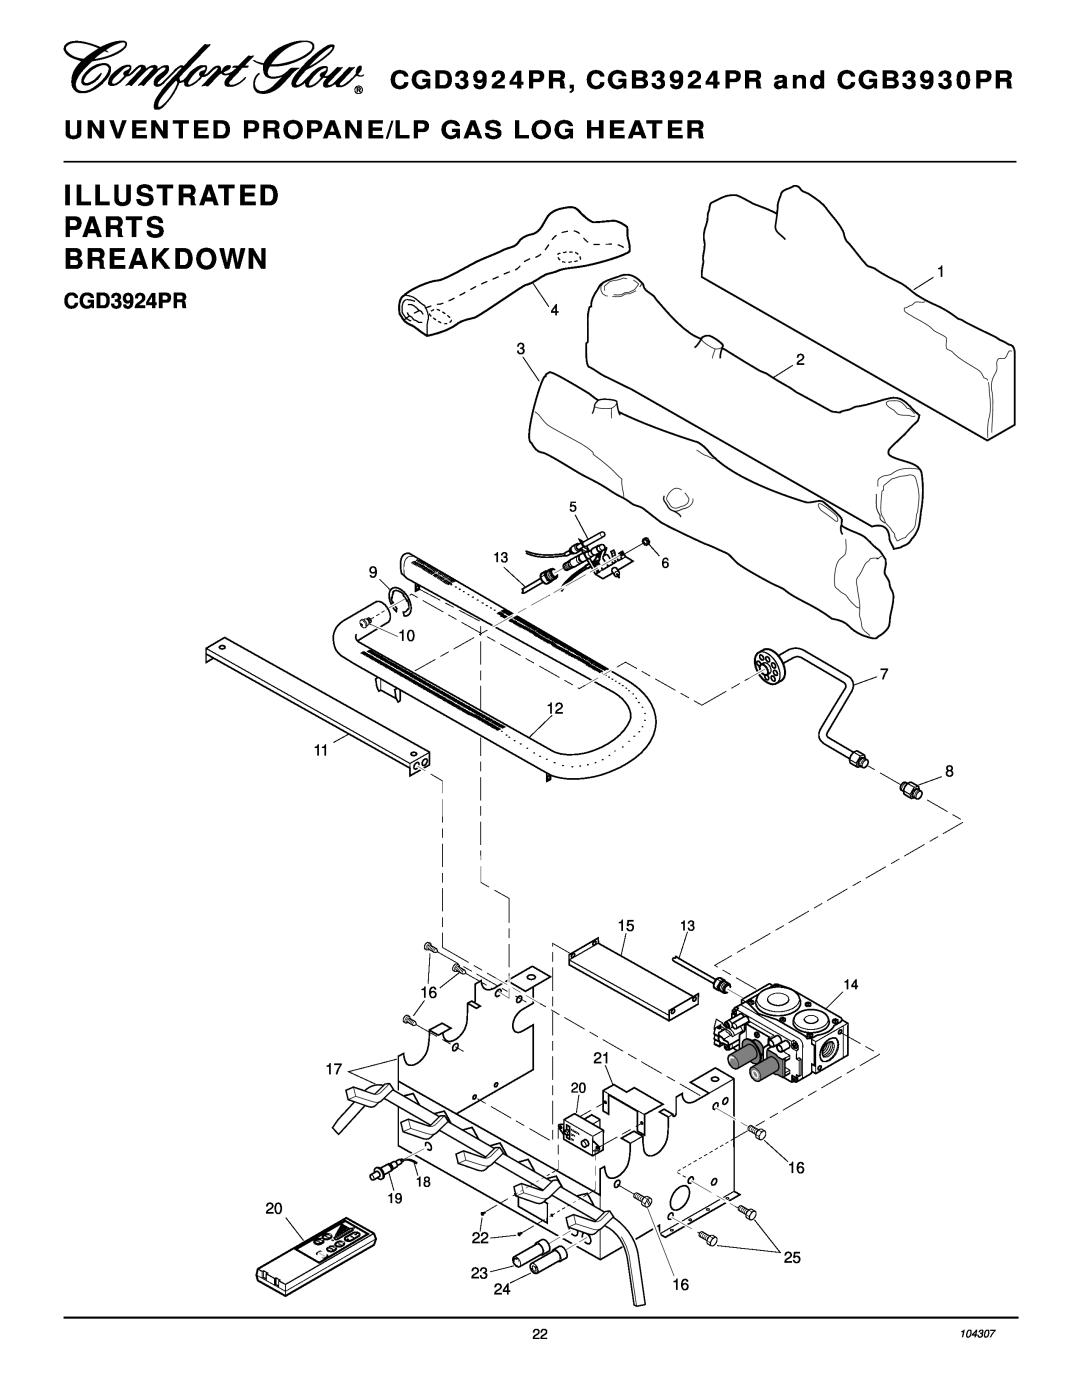 Desa CGB3924PR, CGB3930PR installation manual Illustrated Parts Breakdown, CGD3924PR, 104307, Remote Off On, I H Lo 